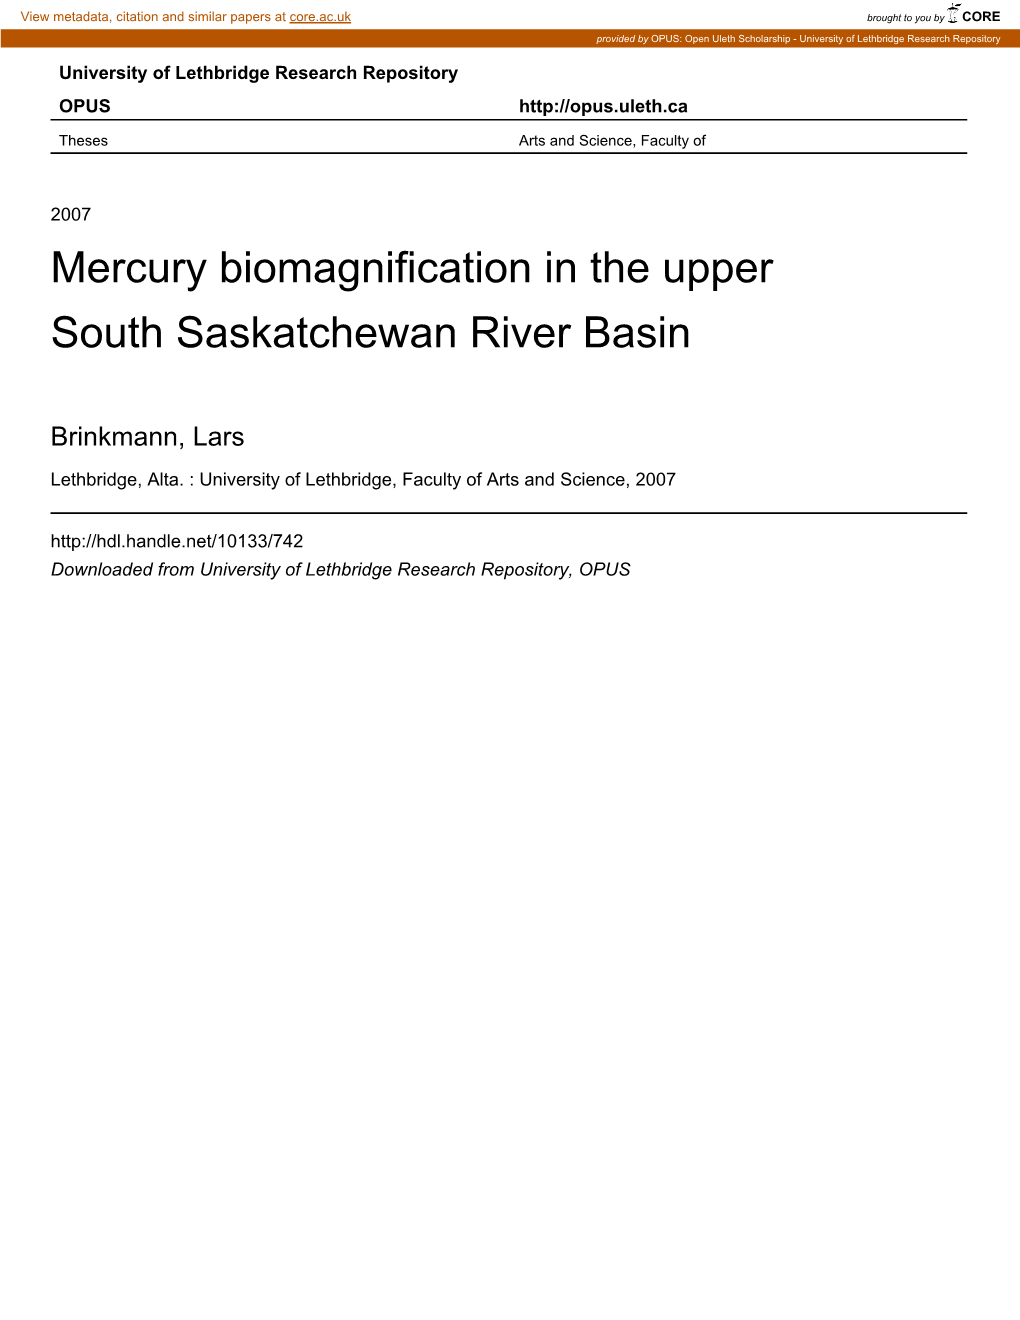 Mercury Biomagnification in the Upper South Saskatchewan River Basin